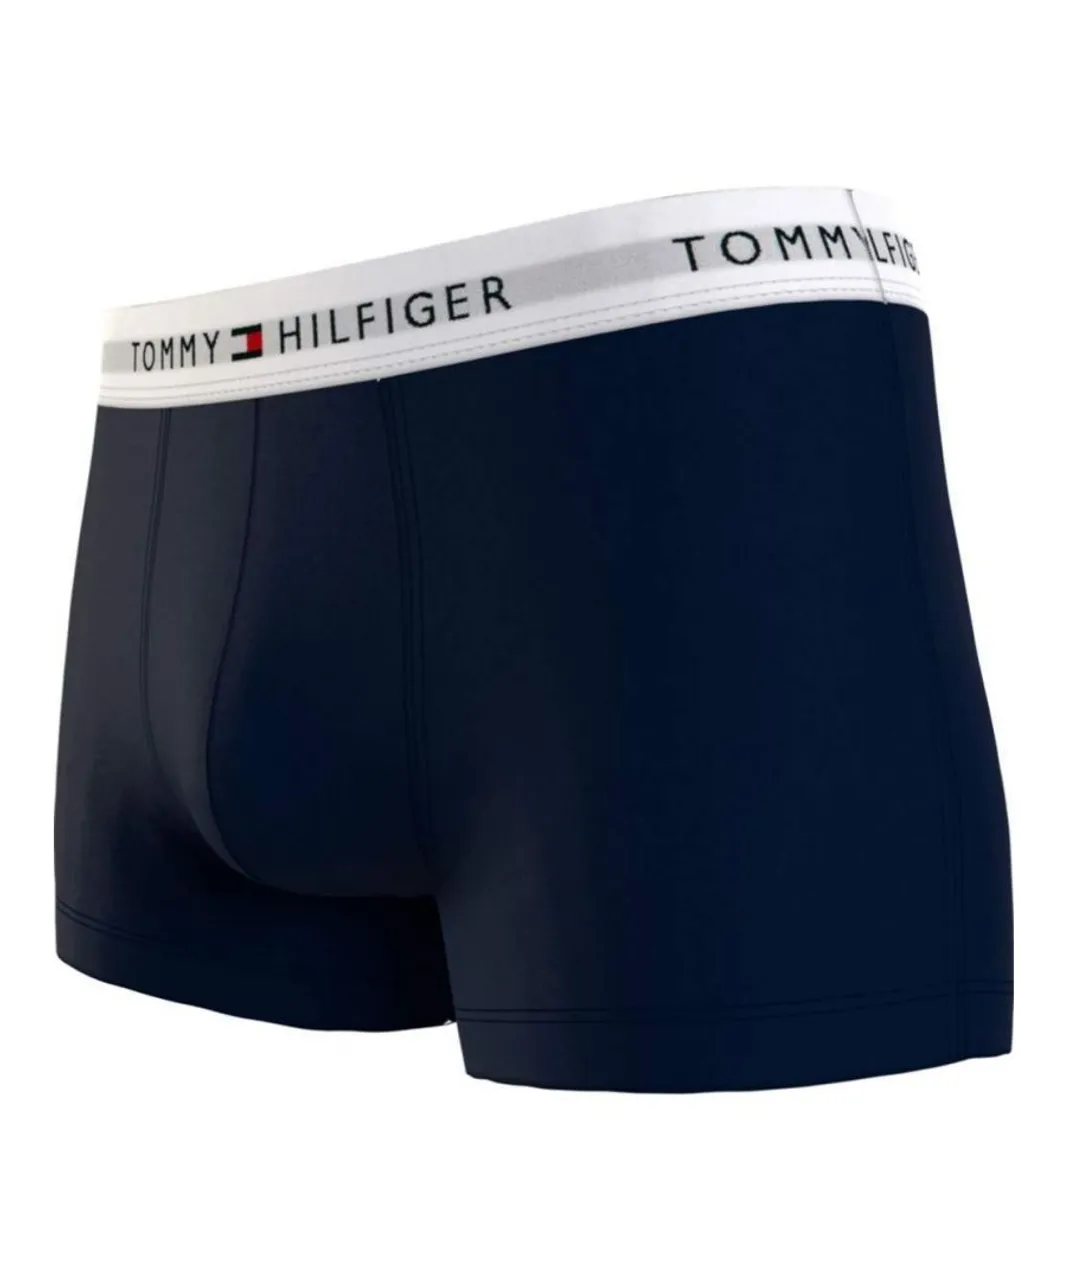 Tommy Hilfiger Mens 3-Pack Boxer Shorts in Multi colour - Multicolour Cotton